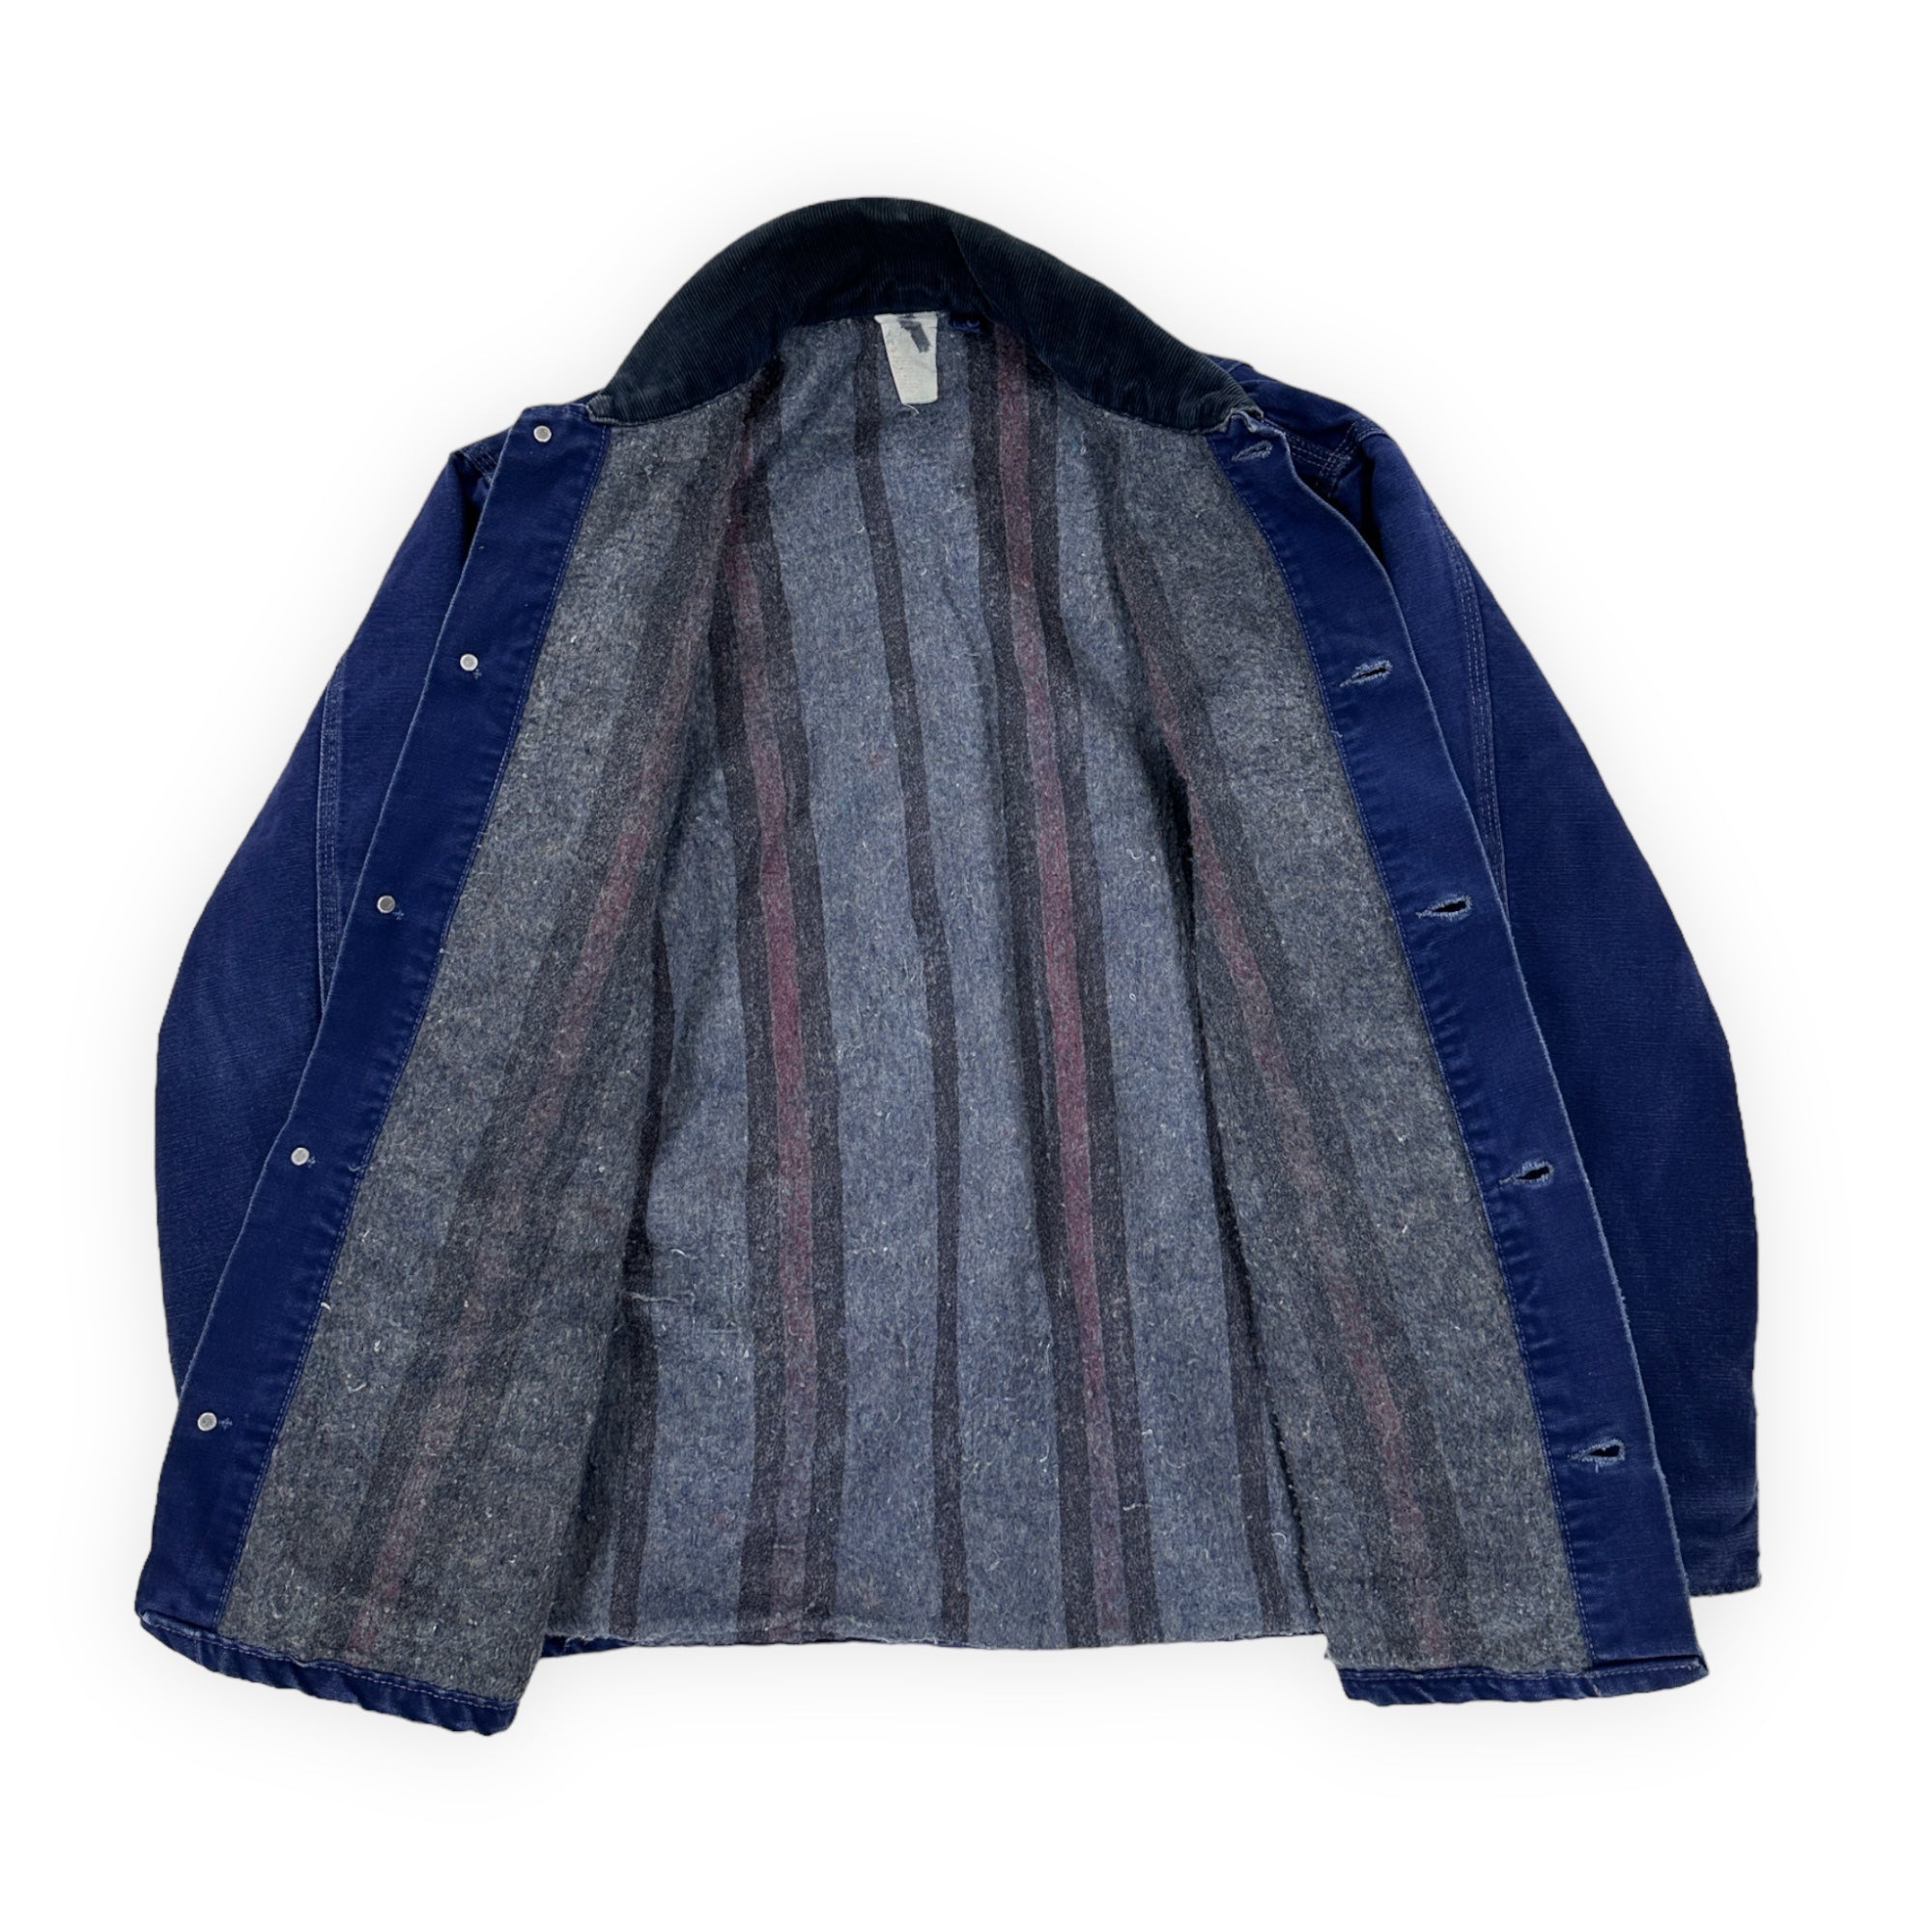 Vintage 90s Carhartt Blanket Lined Jacket - Men's Medium Great Lakes Reclaimed Denim